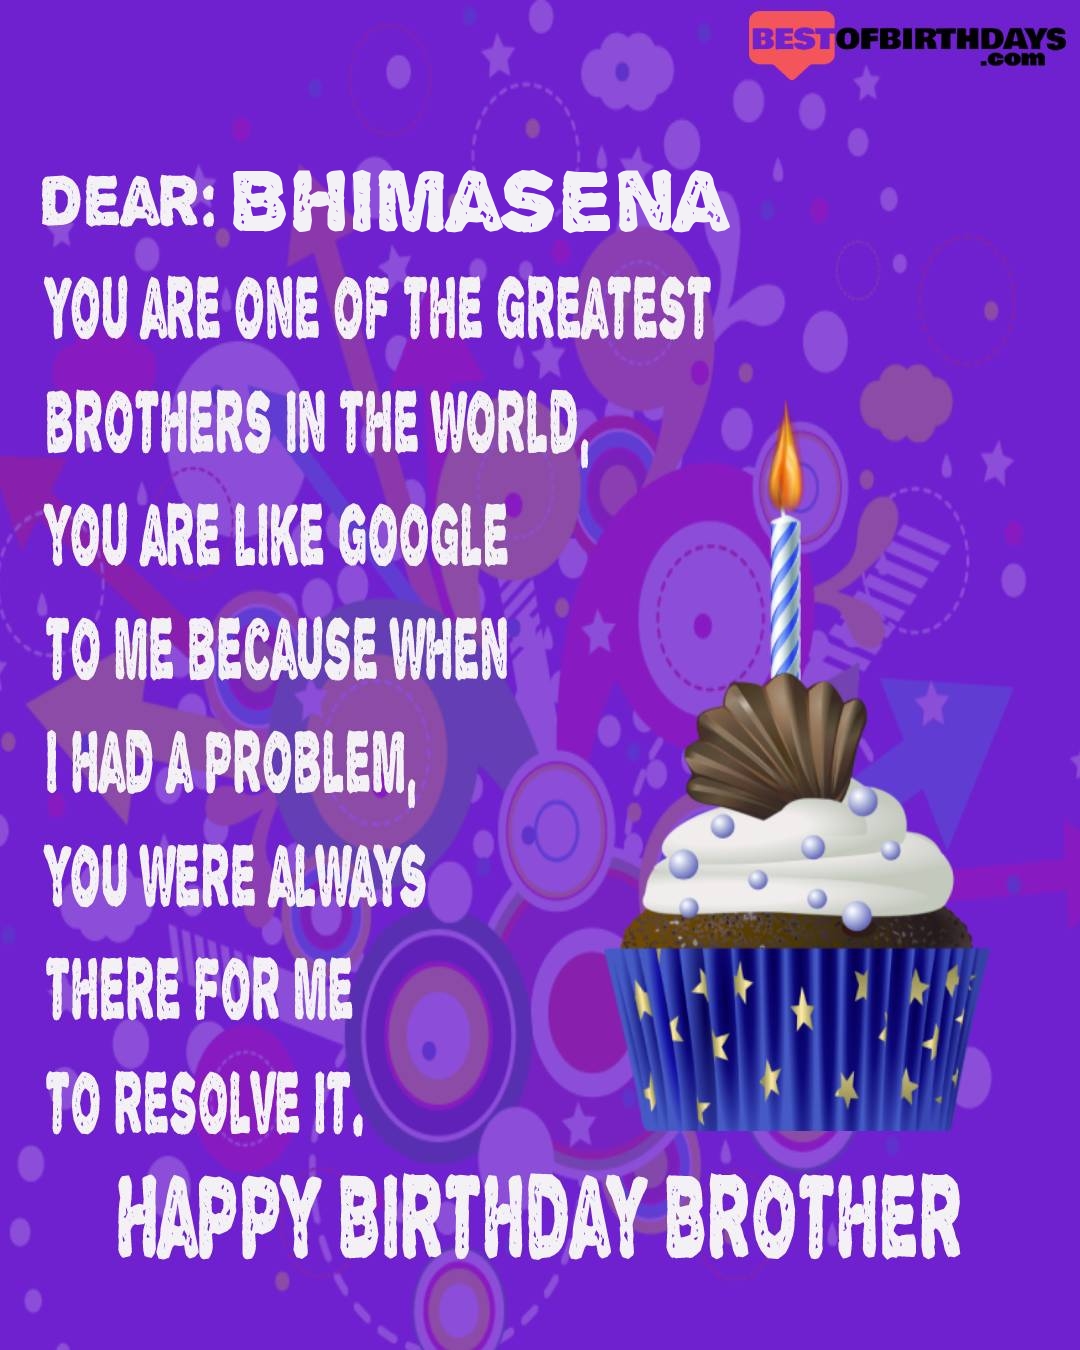 Happy birthday bhimasena bhai brother bro